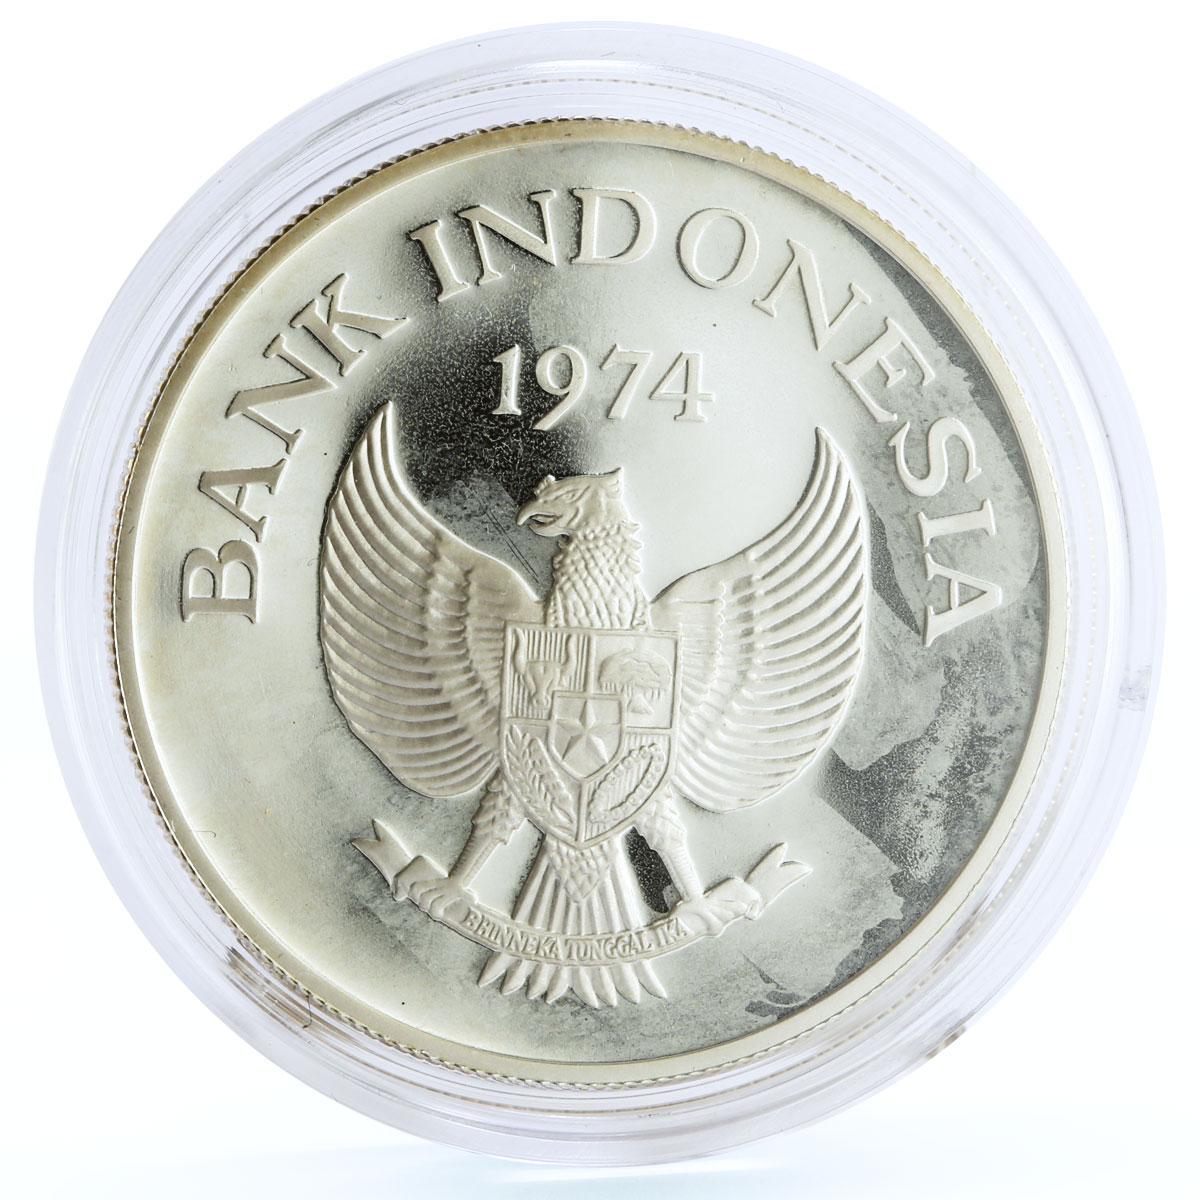 Indonesia 2000 rupiah Endangered Wildlife Javan Tiger Fauna silver coin 1974